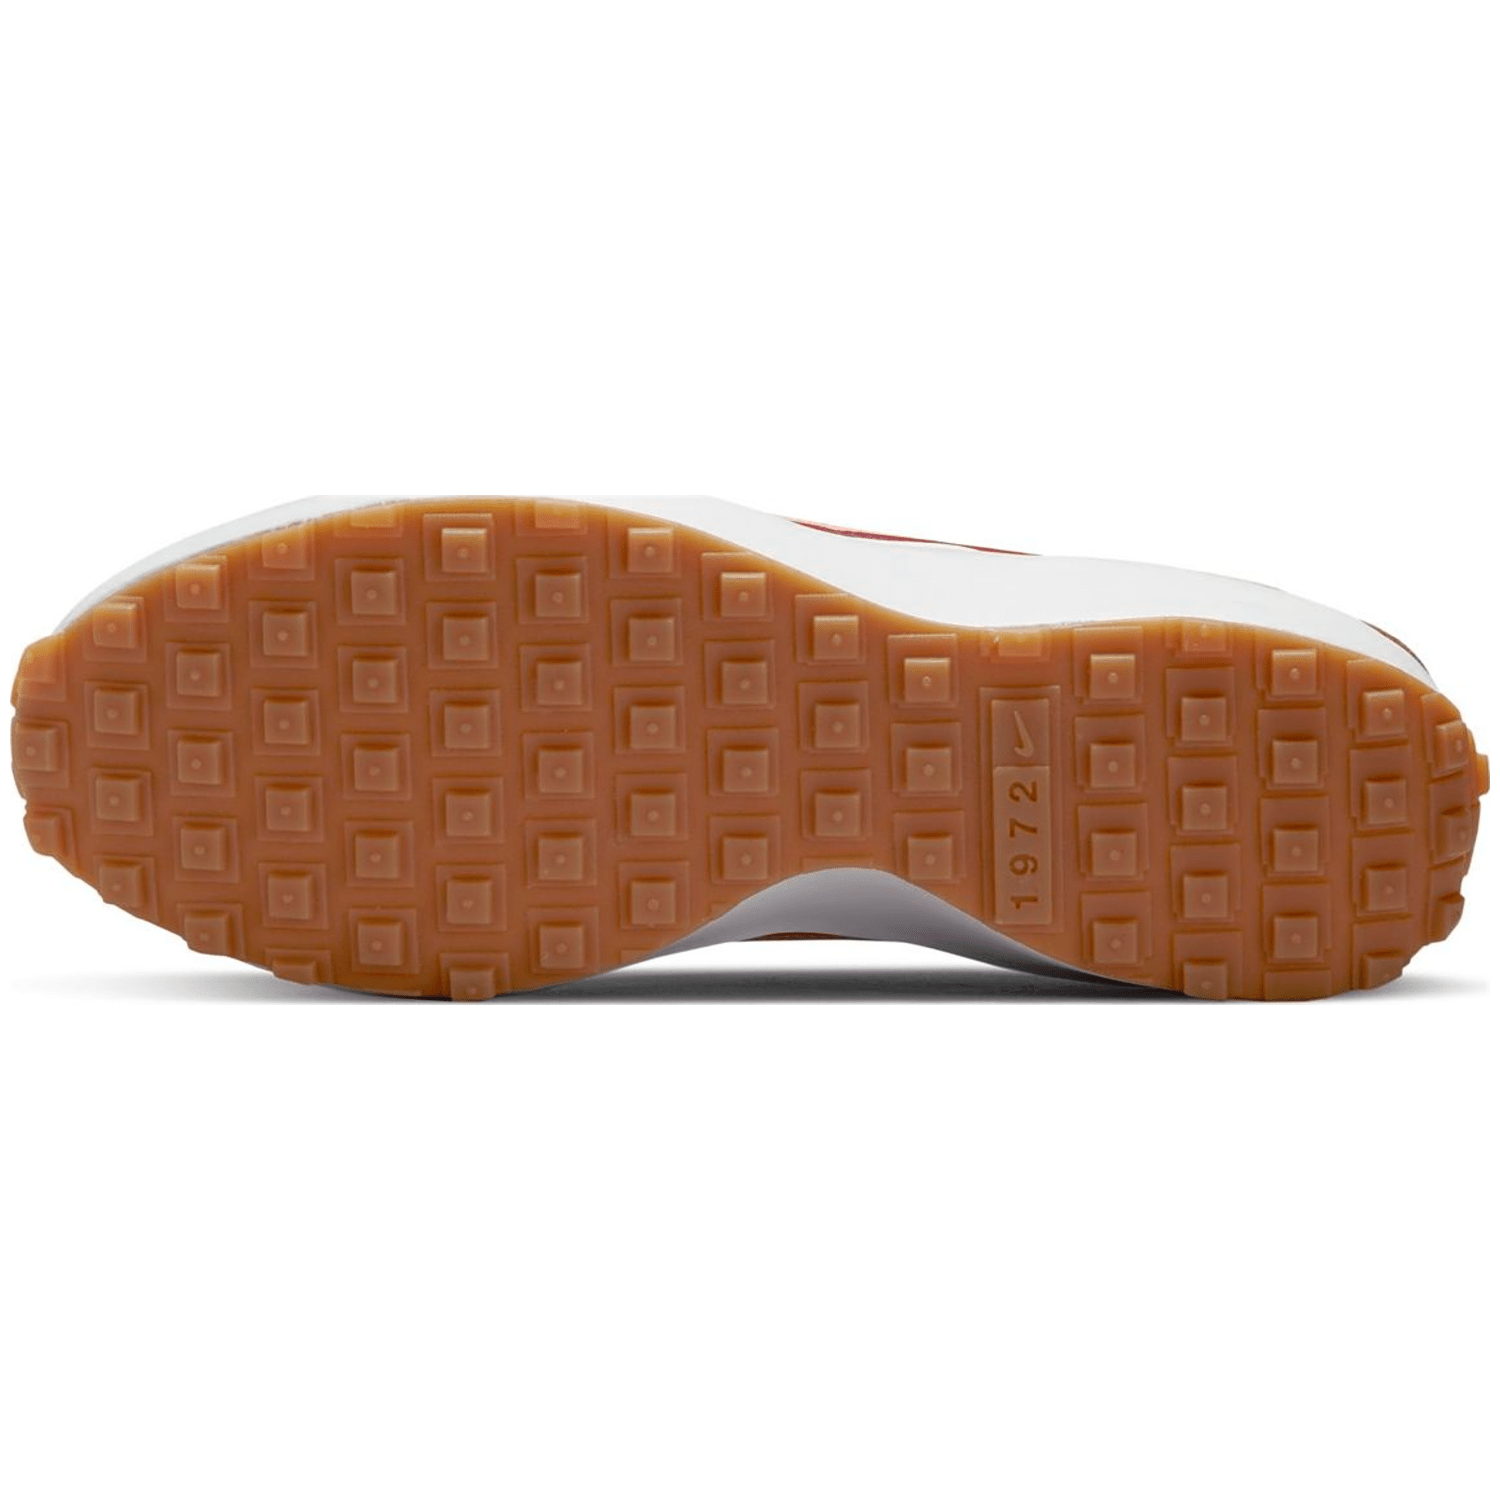 Nike Waffle Debut Damen Freizeit-Schuh